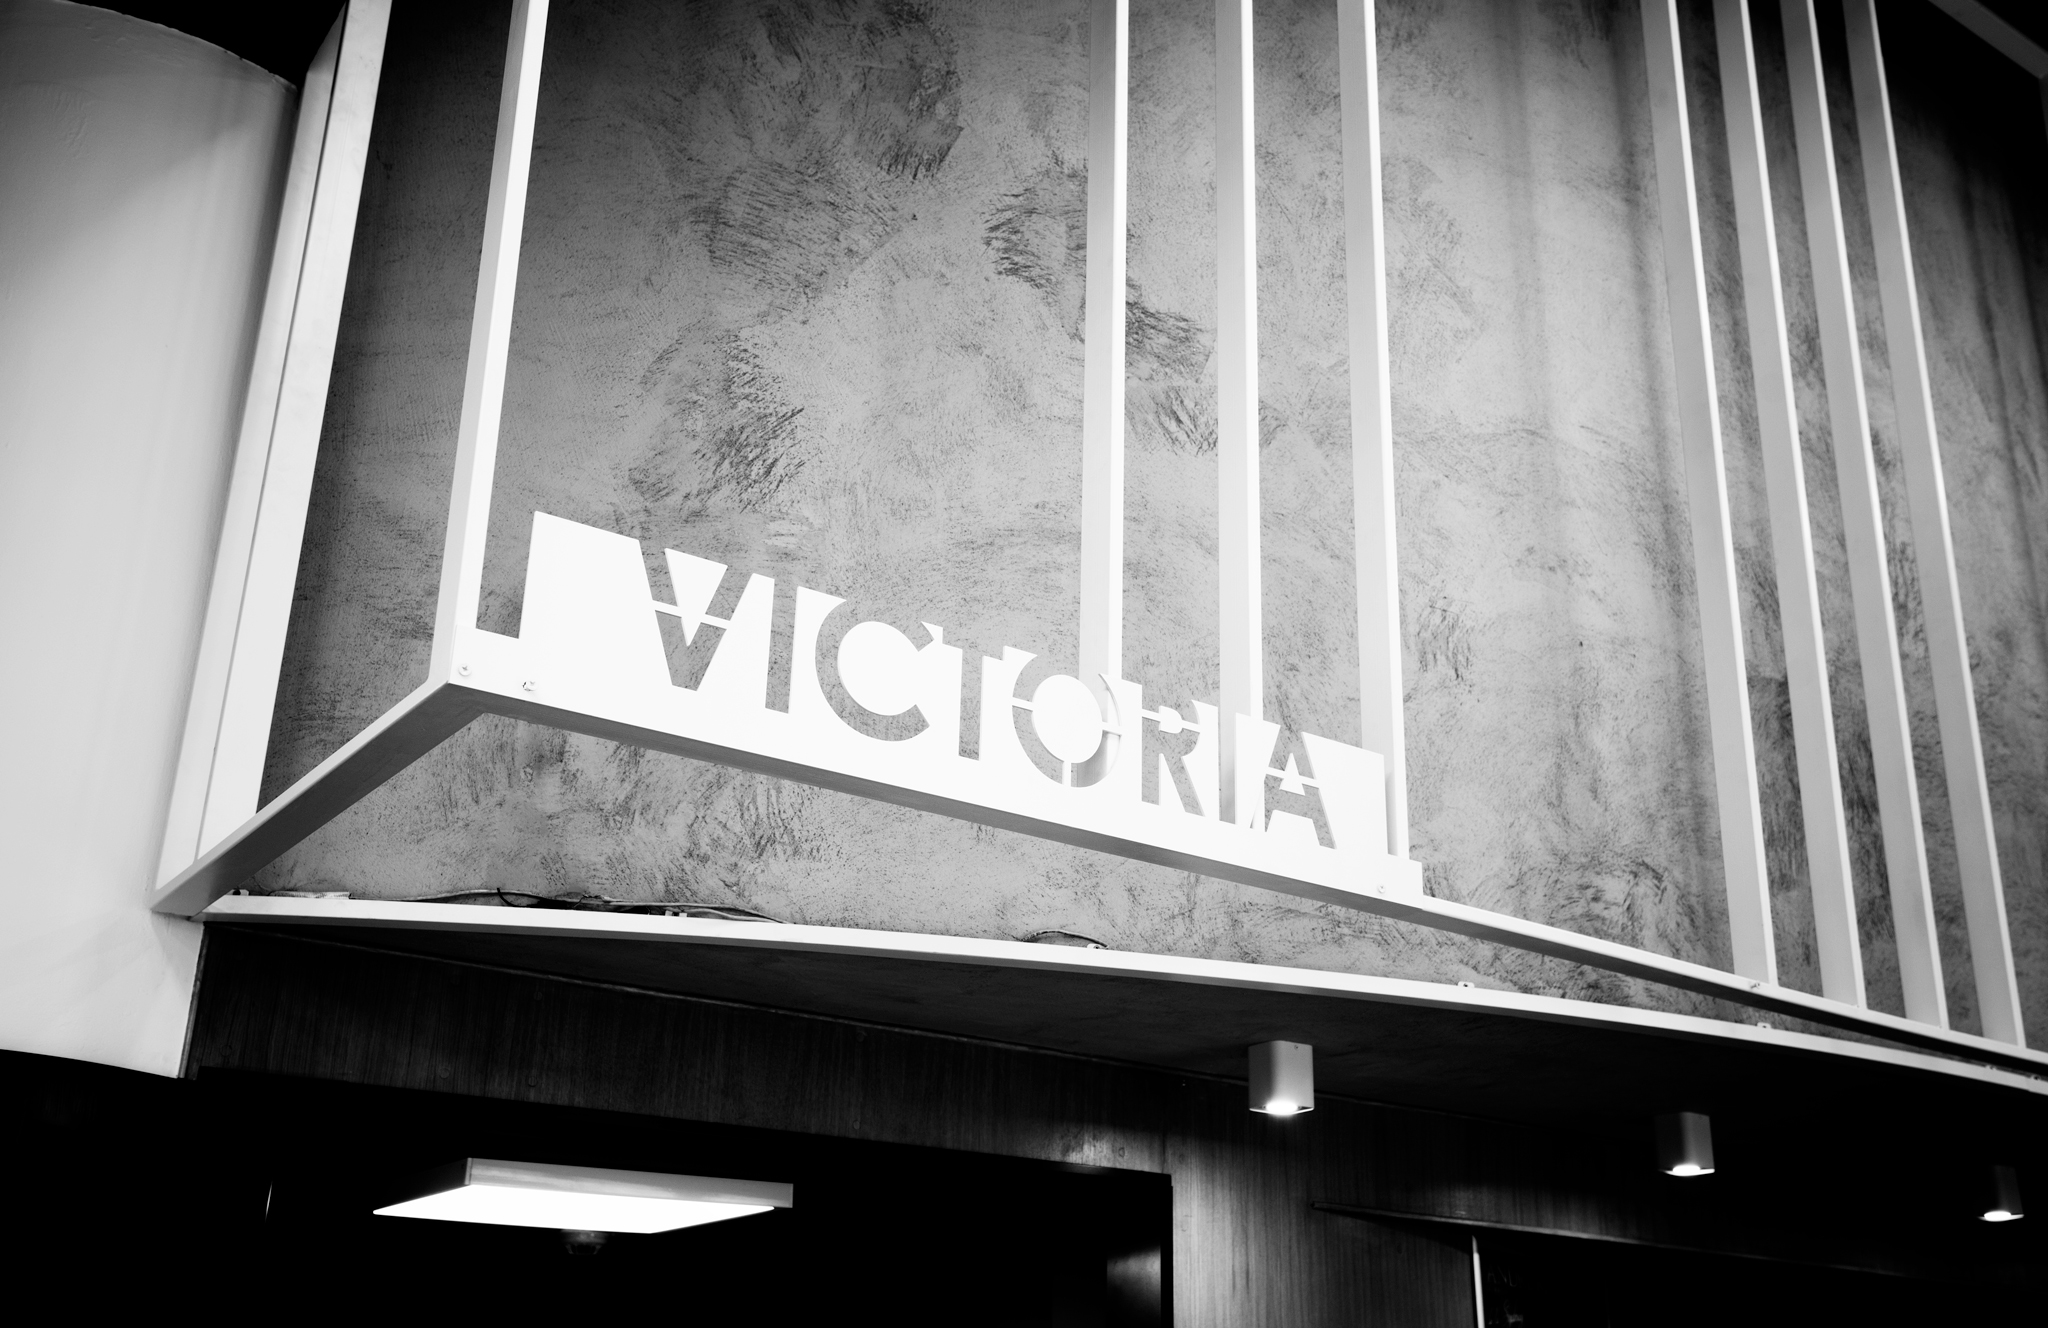 Lobby cinema Victoria